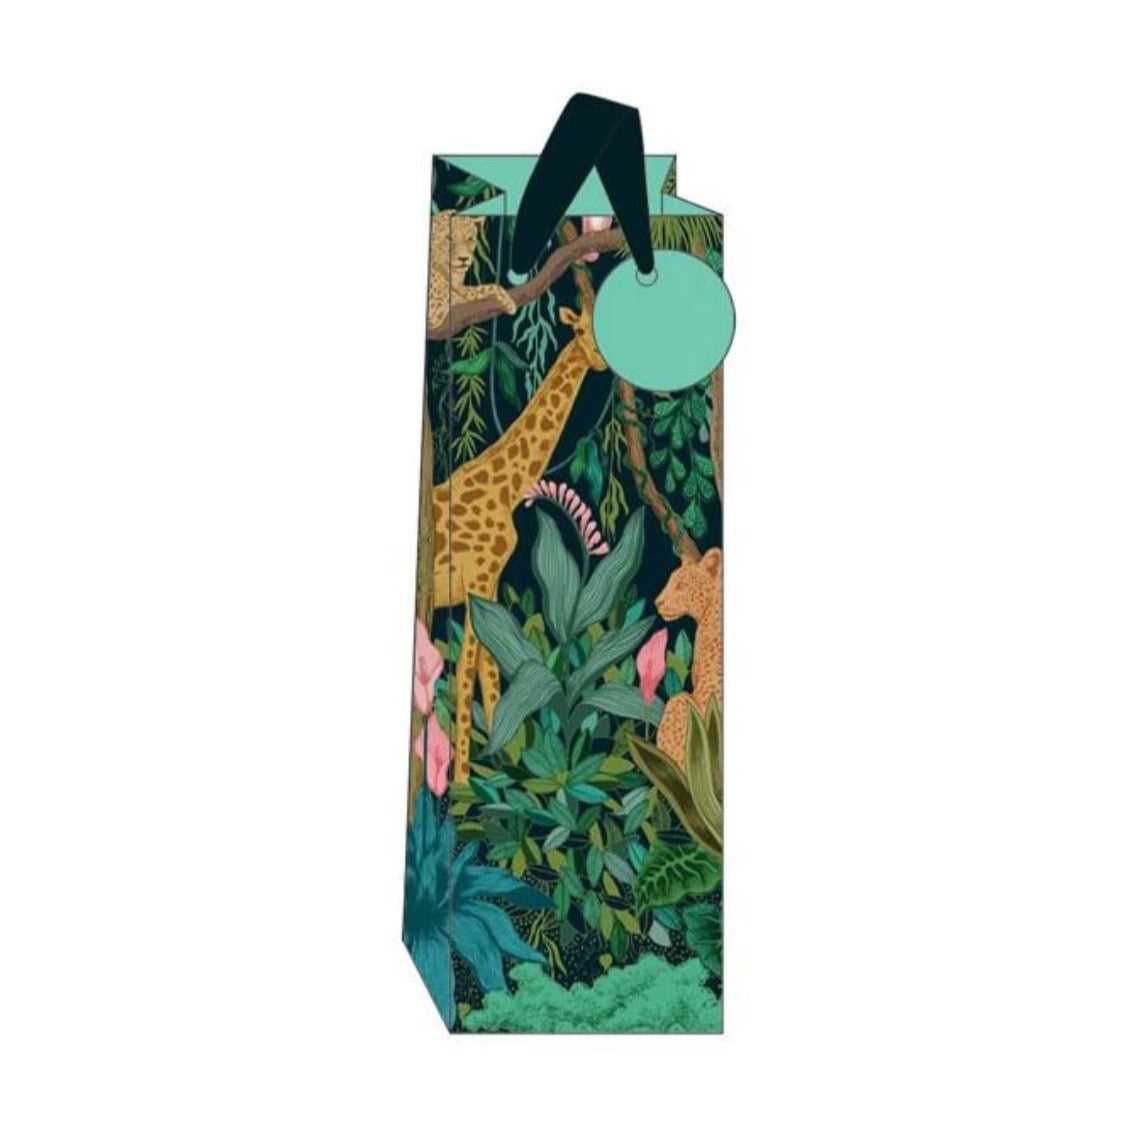 The Art File - Safari Bottle Bag